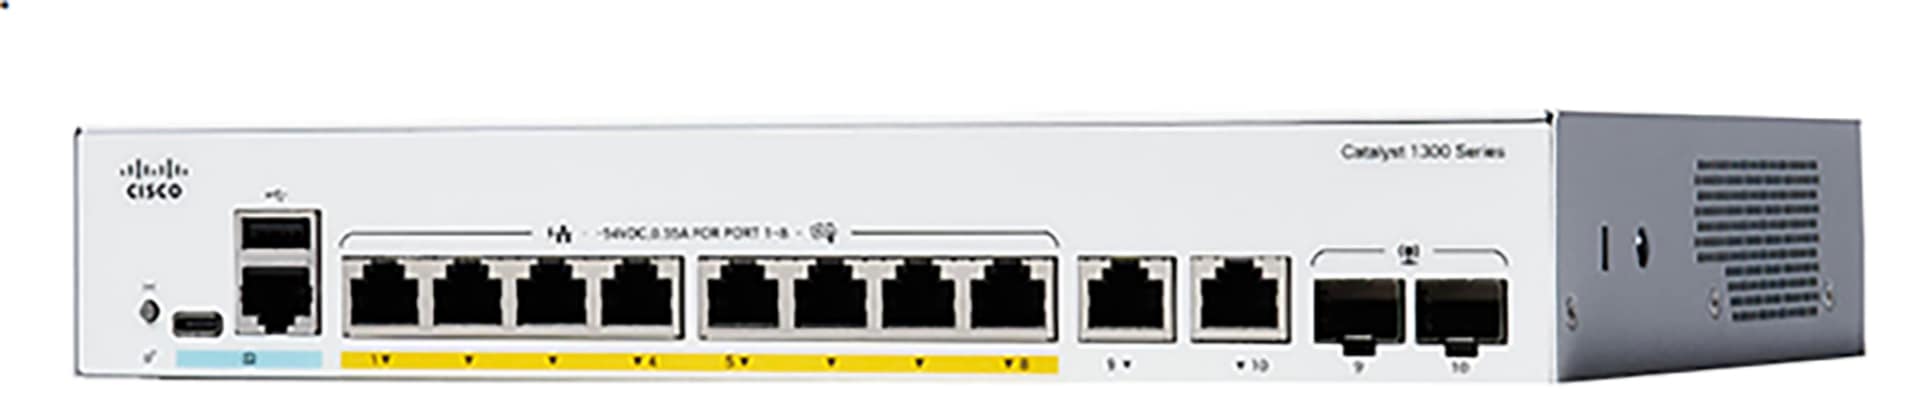 Cisco Catalyst 1300 8-Port Gigabit Ethernet Switch with External Power Supply